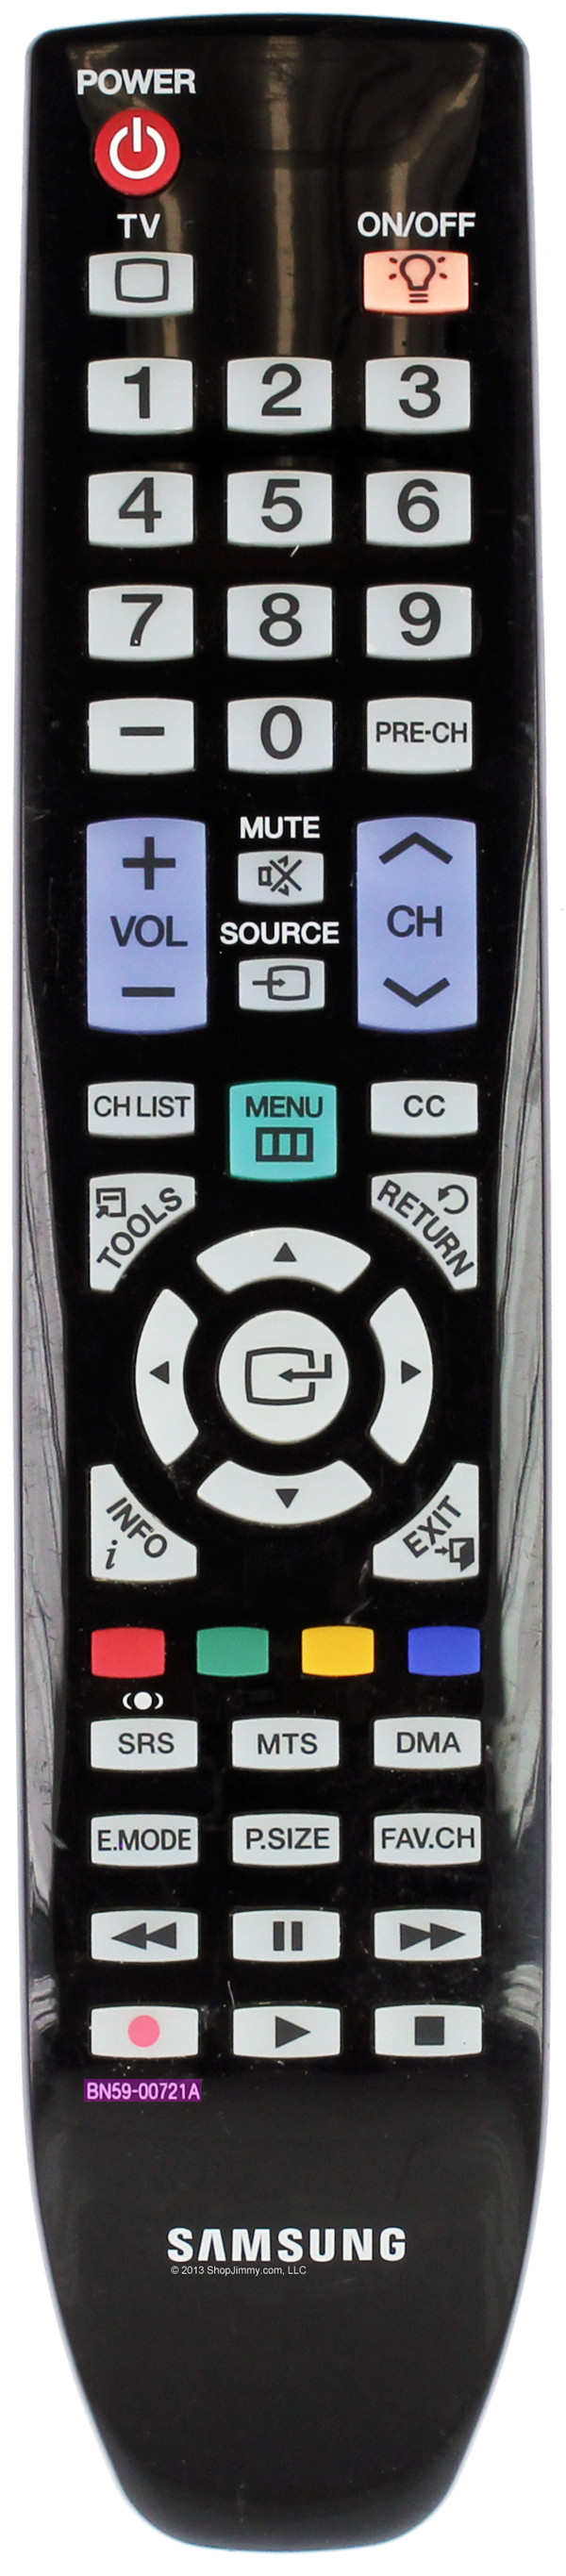 Samsung BN59-00721A Remote Control